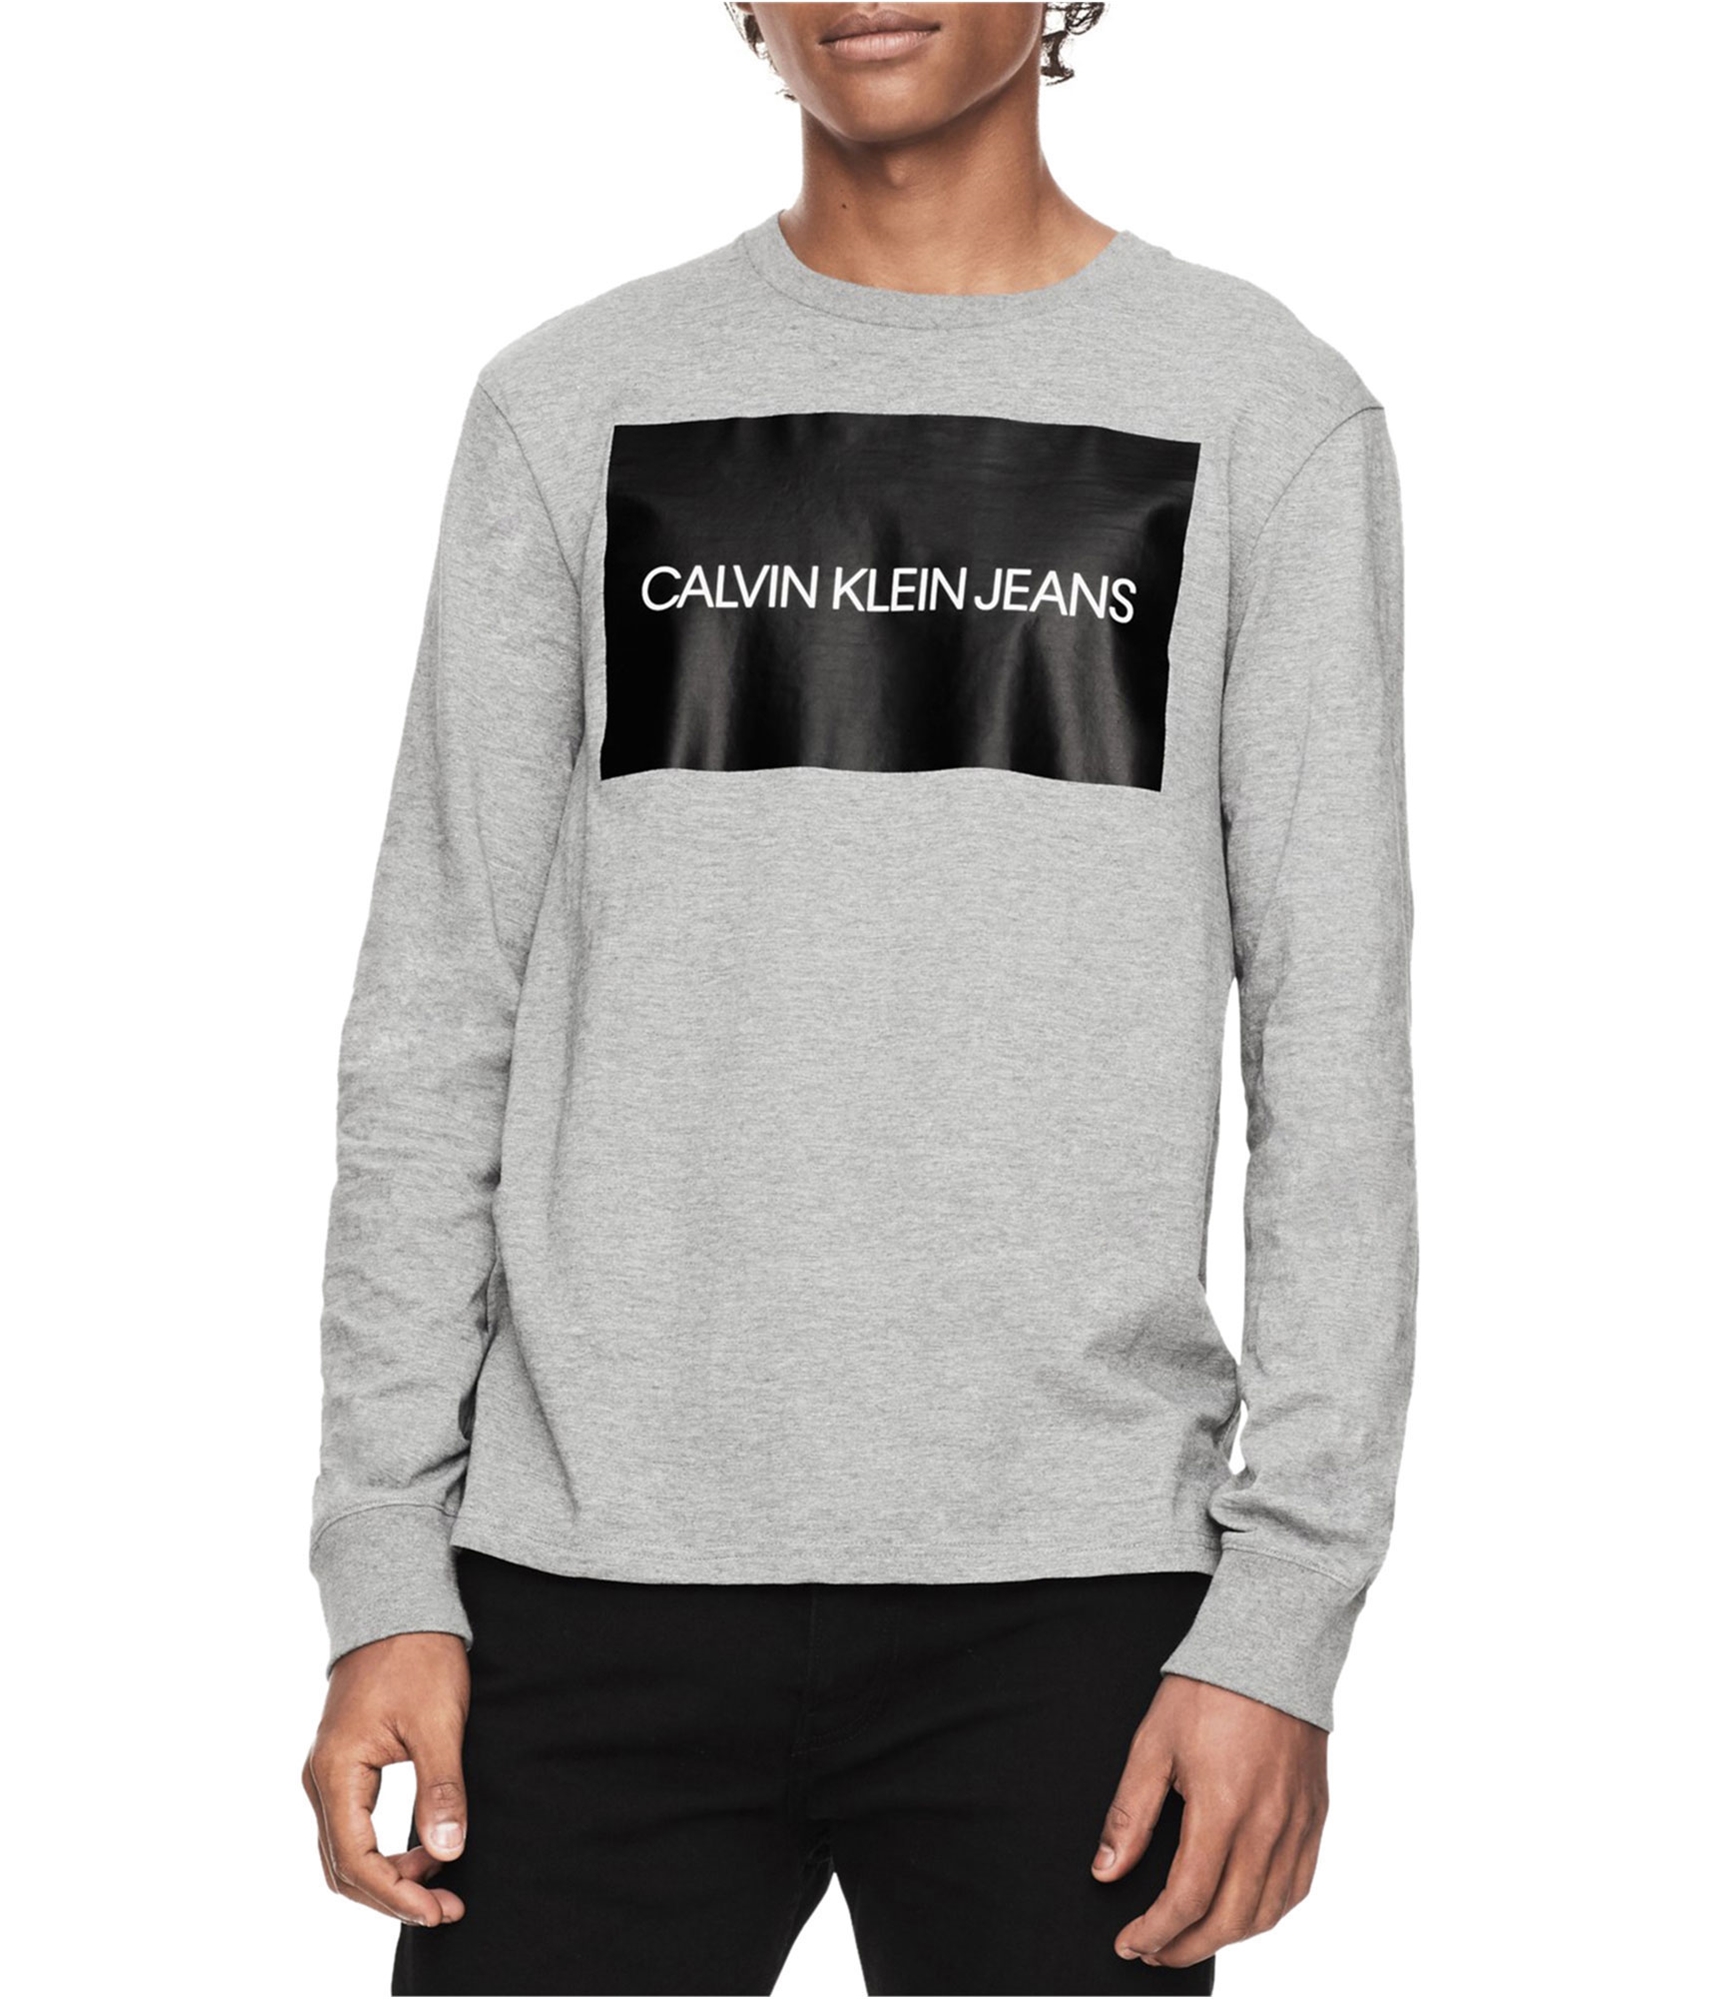 Calvin Klein Mens Boxed Logo Graphic T-Shirt, Grey, Large | eBay